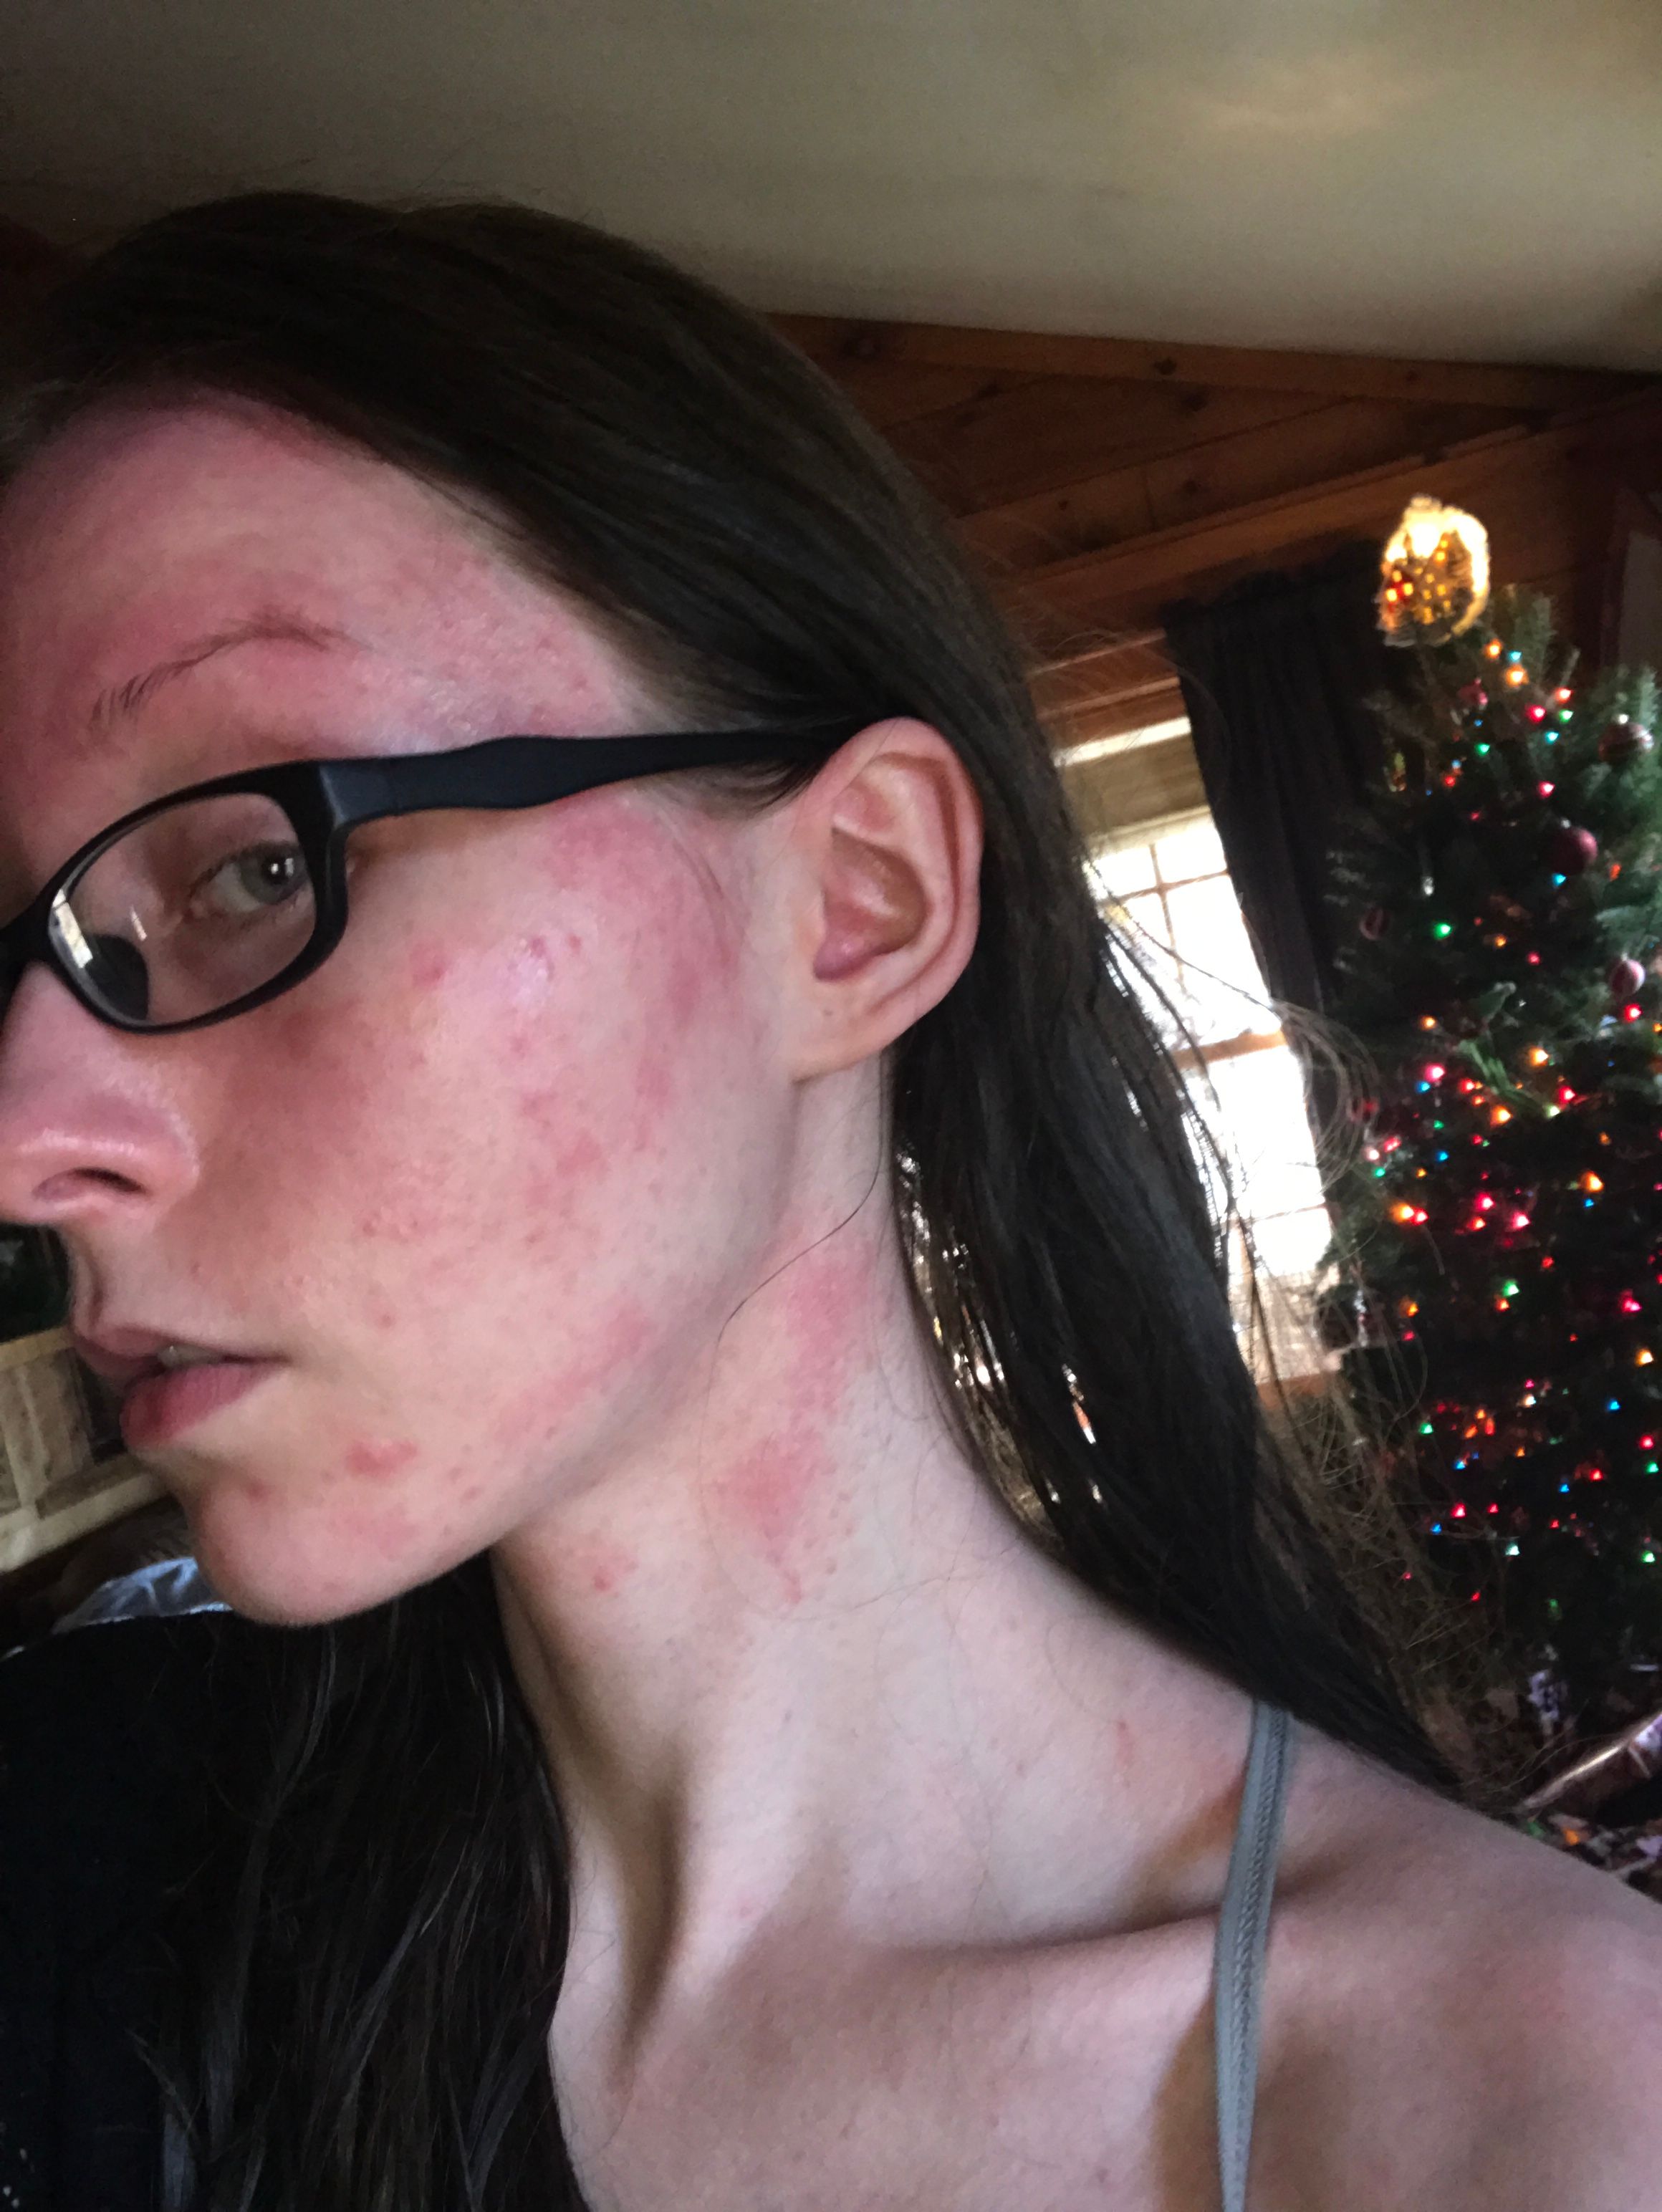 Sensitive skin or allergic reaction? - Beauty Insider Community